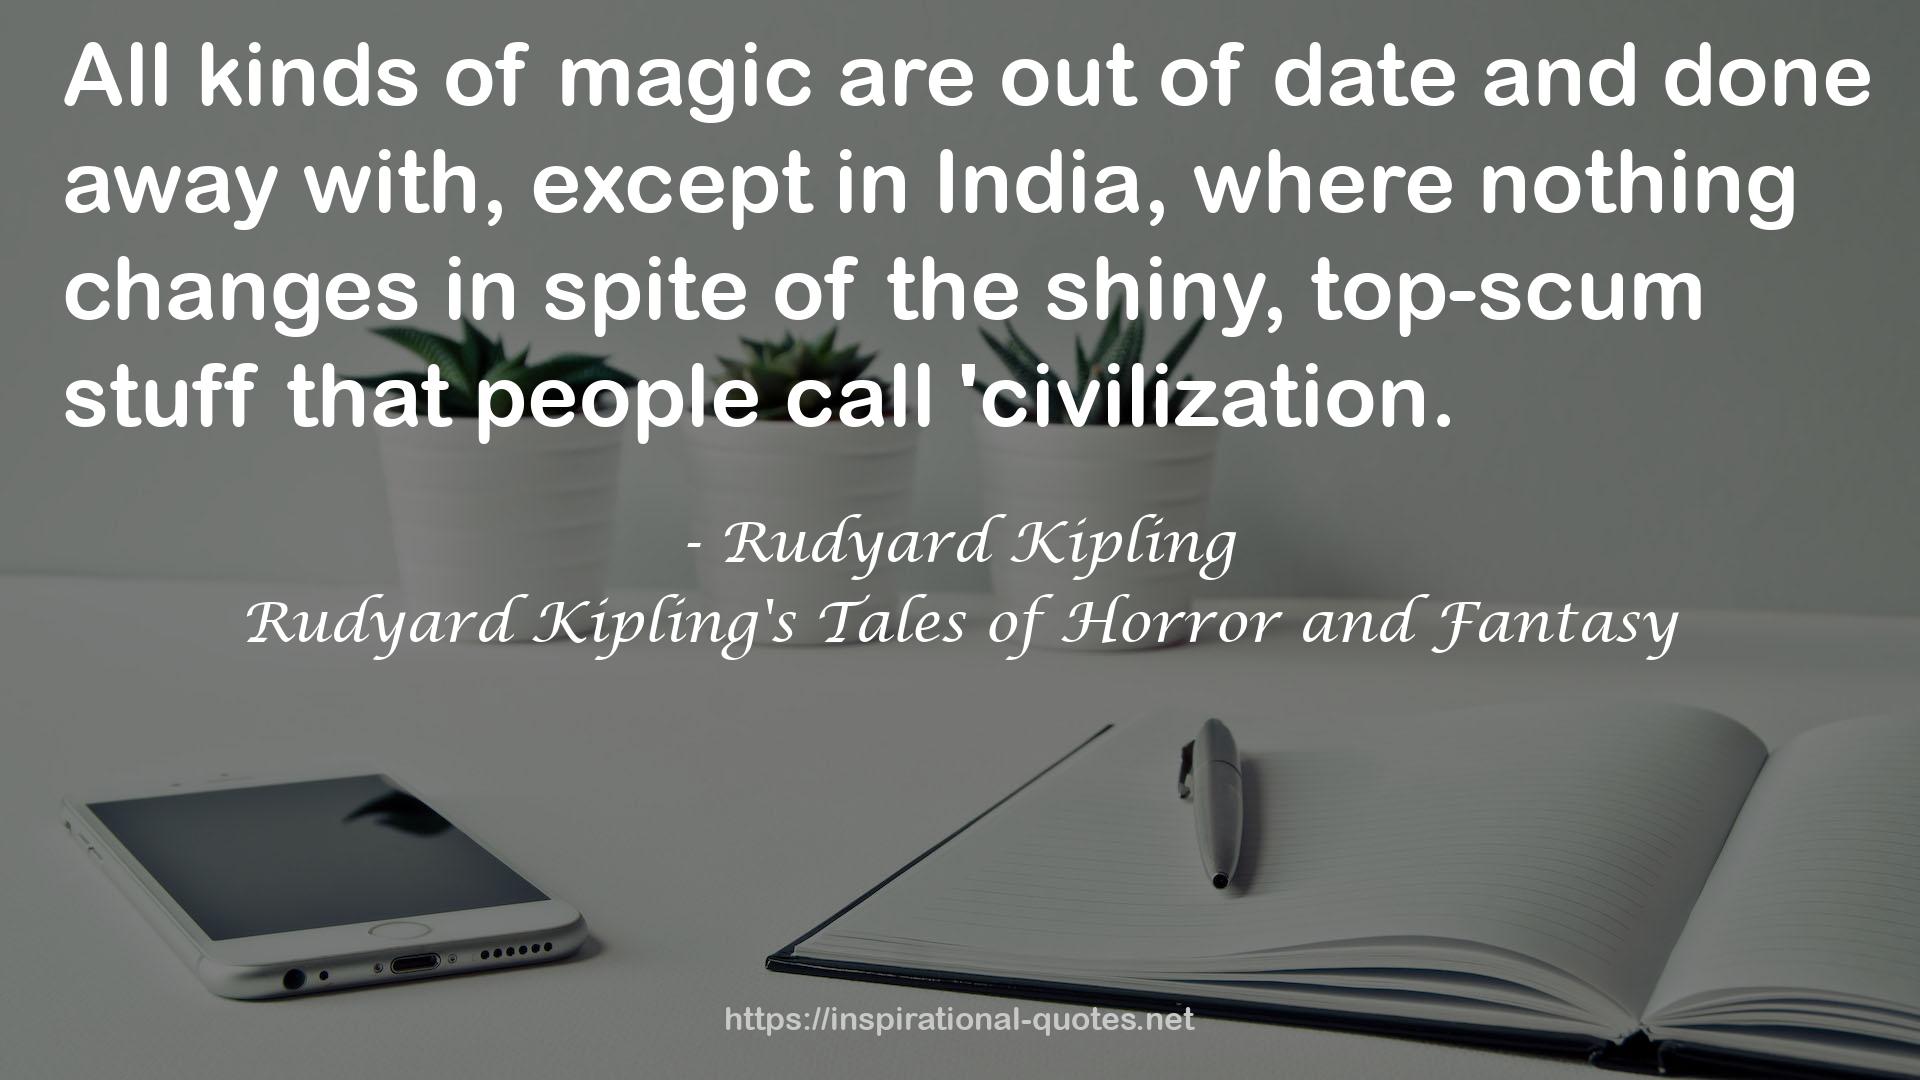 Rudyard Kipling's Tales of Horror and Fantasy QUOTES